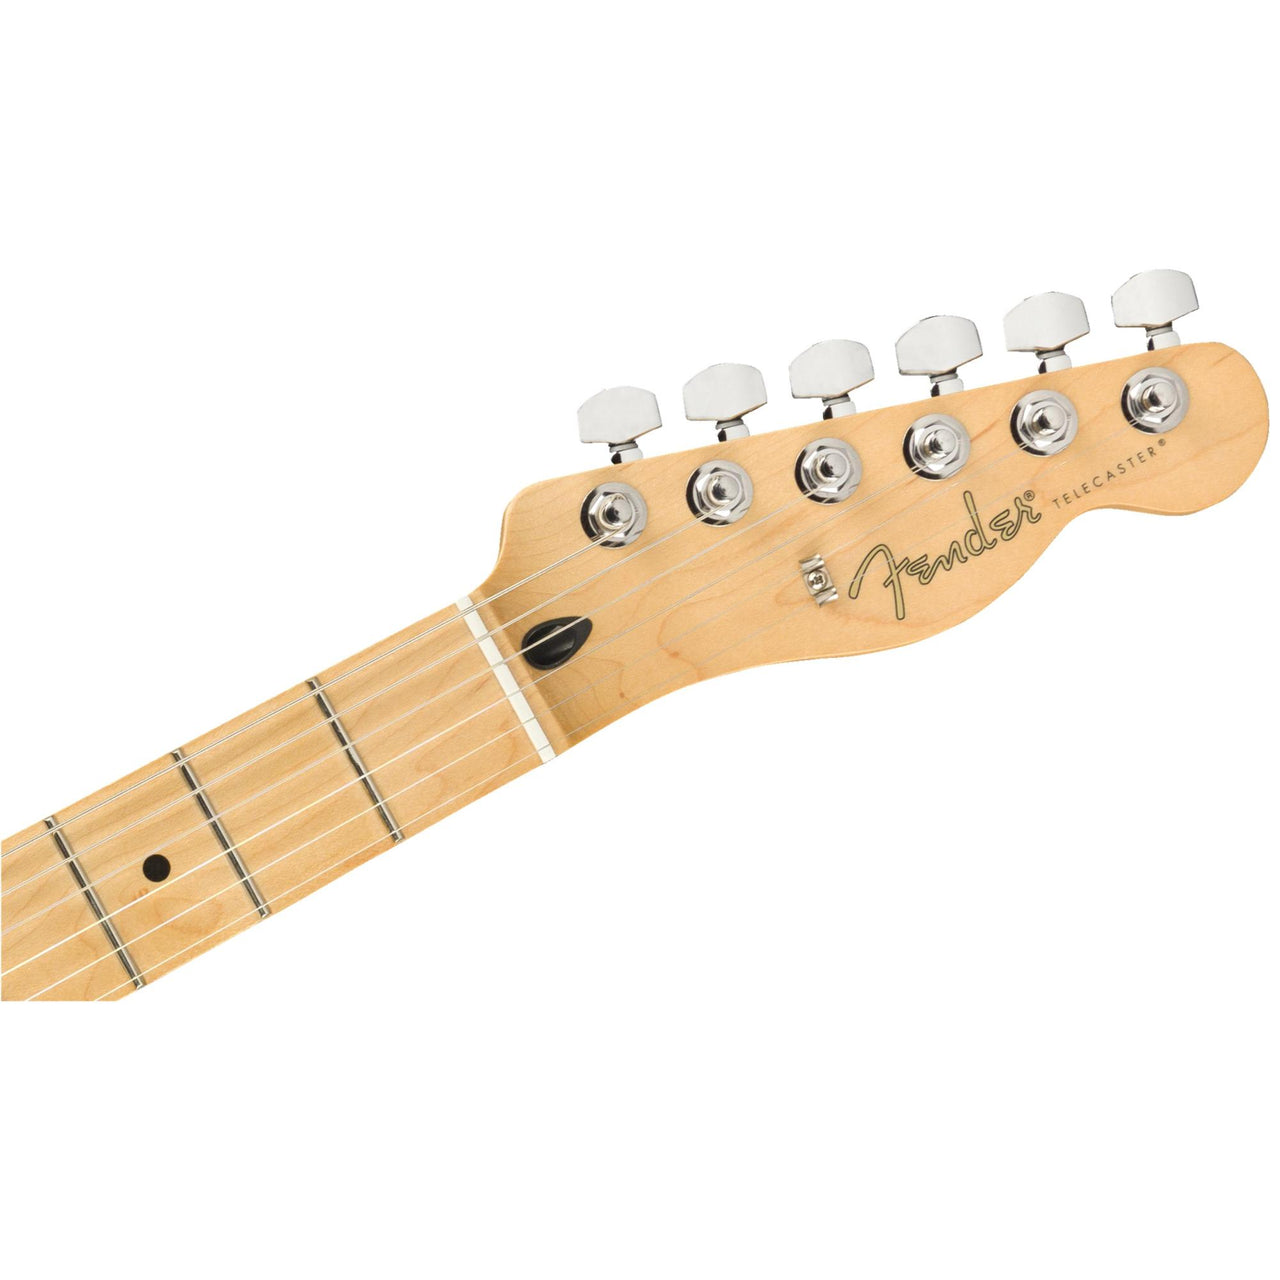 Guitarra Fender Player Telecaster Electrica Black 0145212506